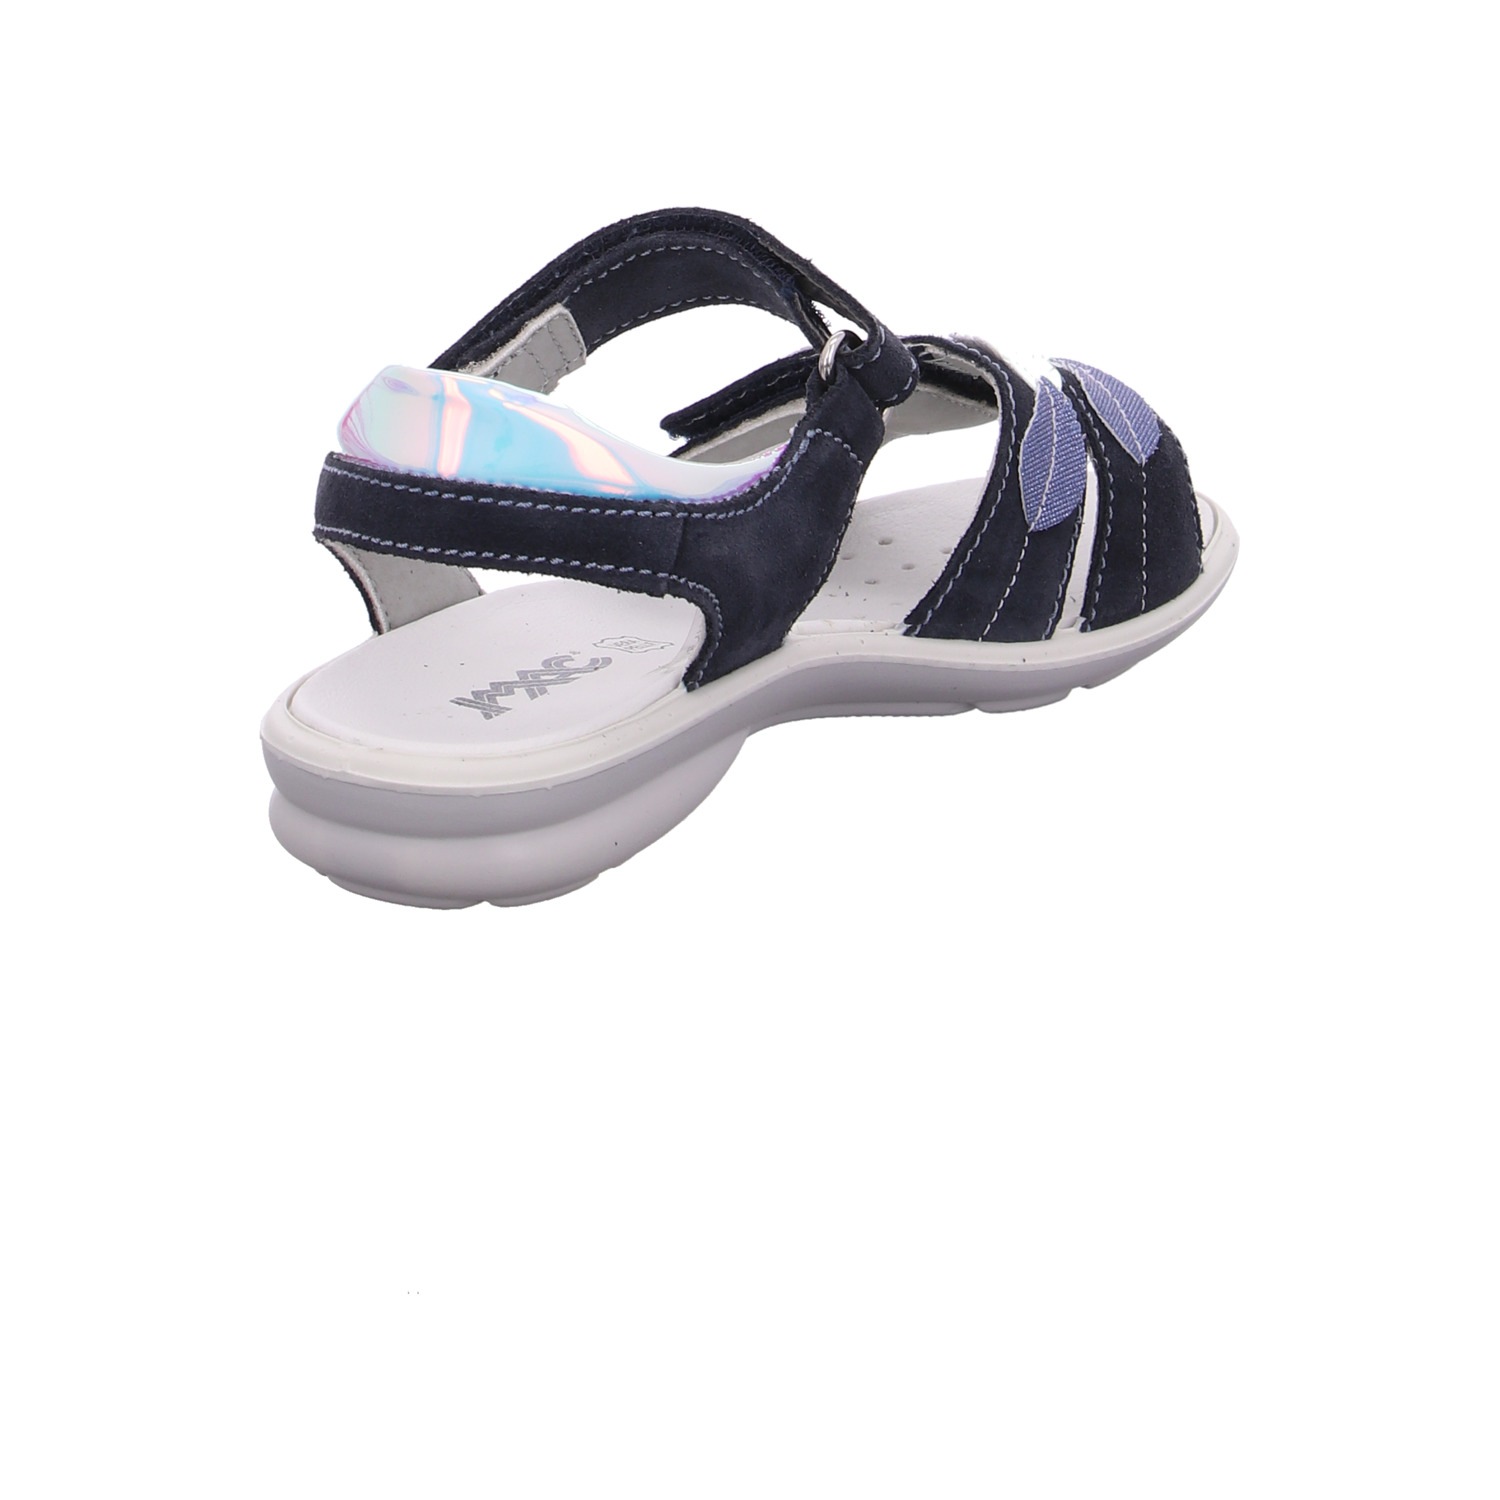 imac-kinder-sandaletten-mädchen-blau-125001-25